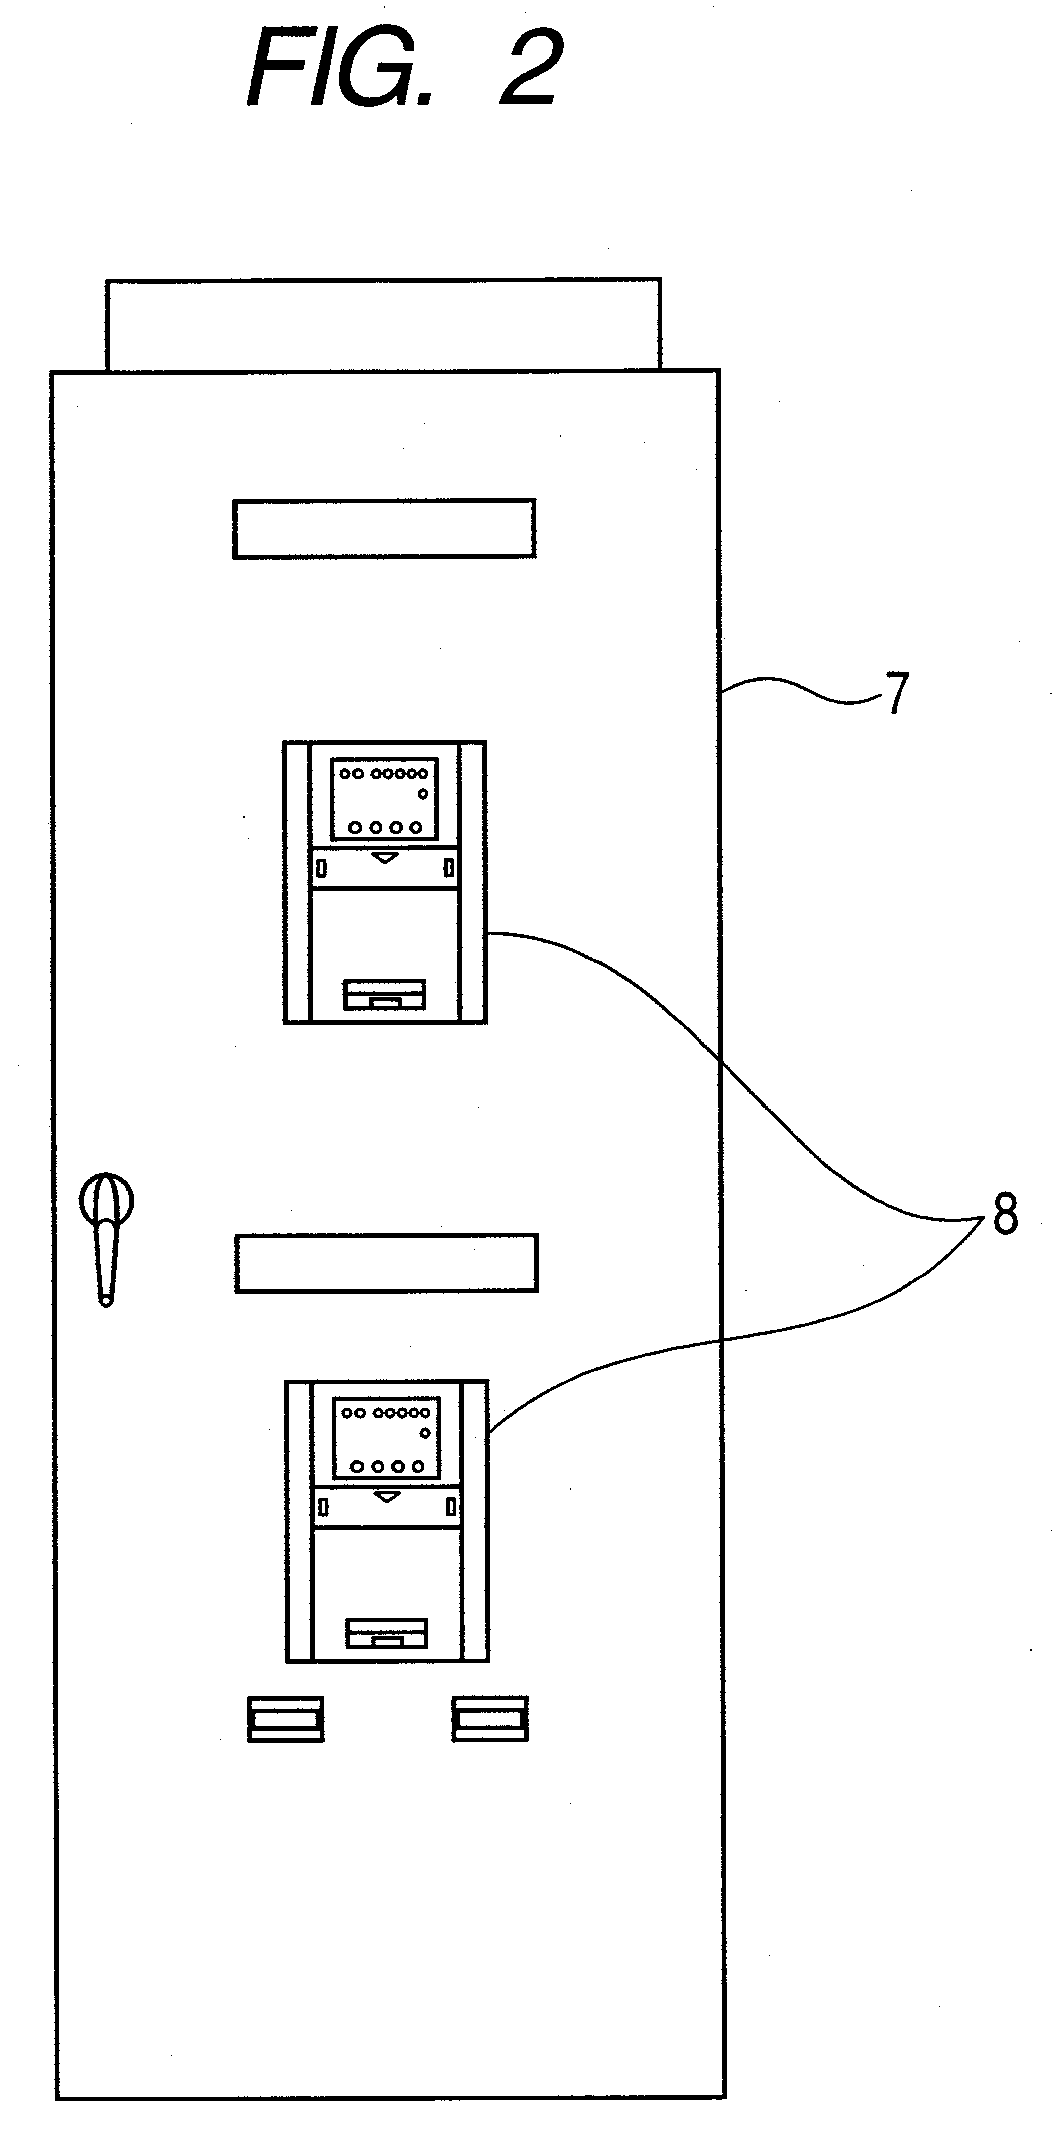 Distribution switchgear